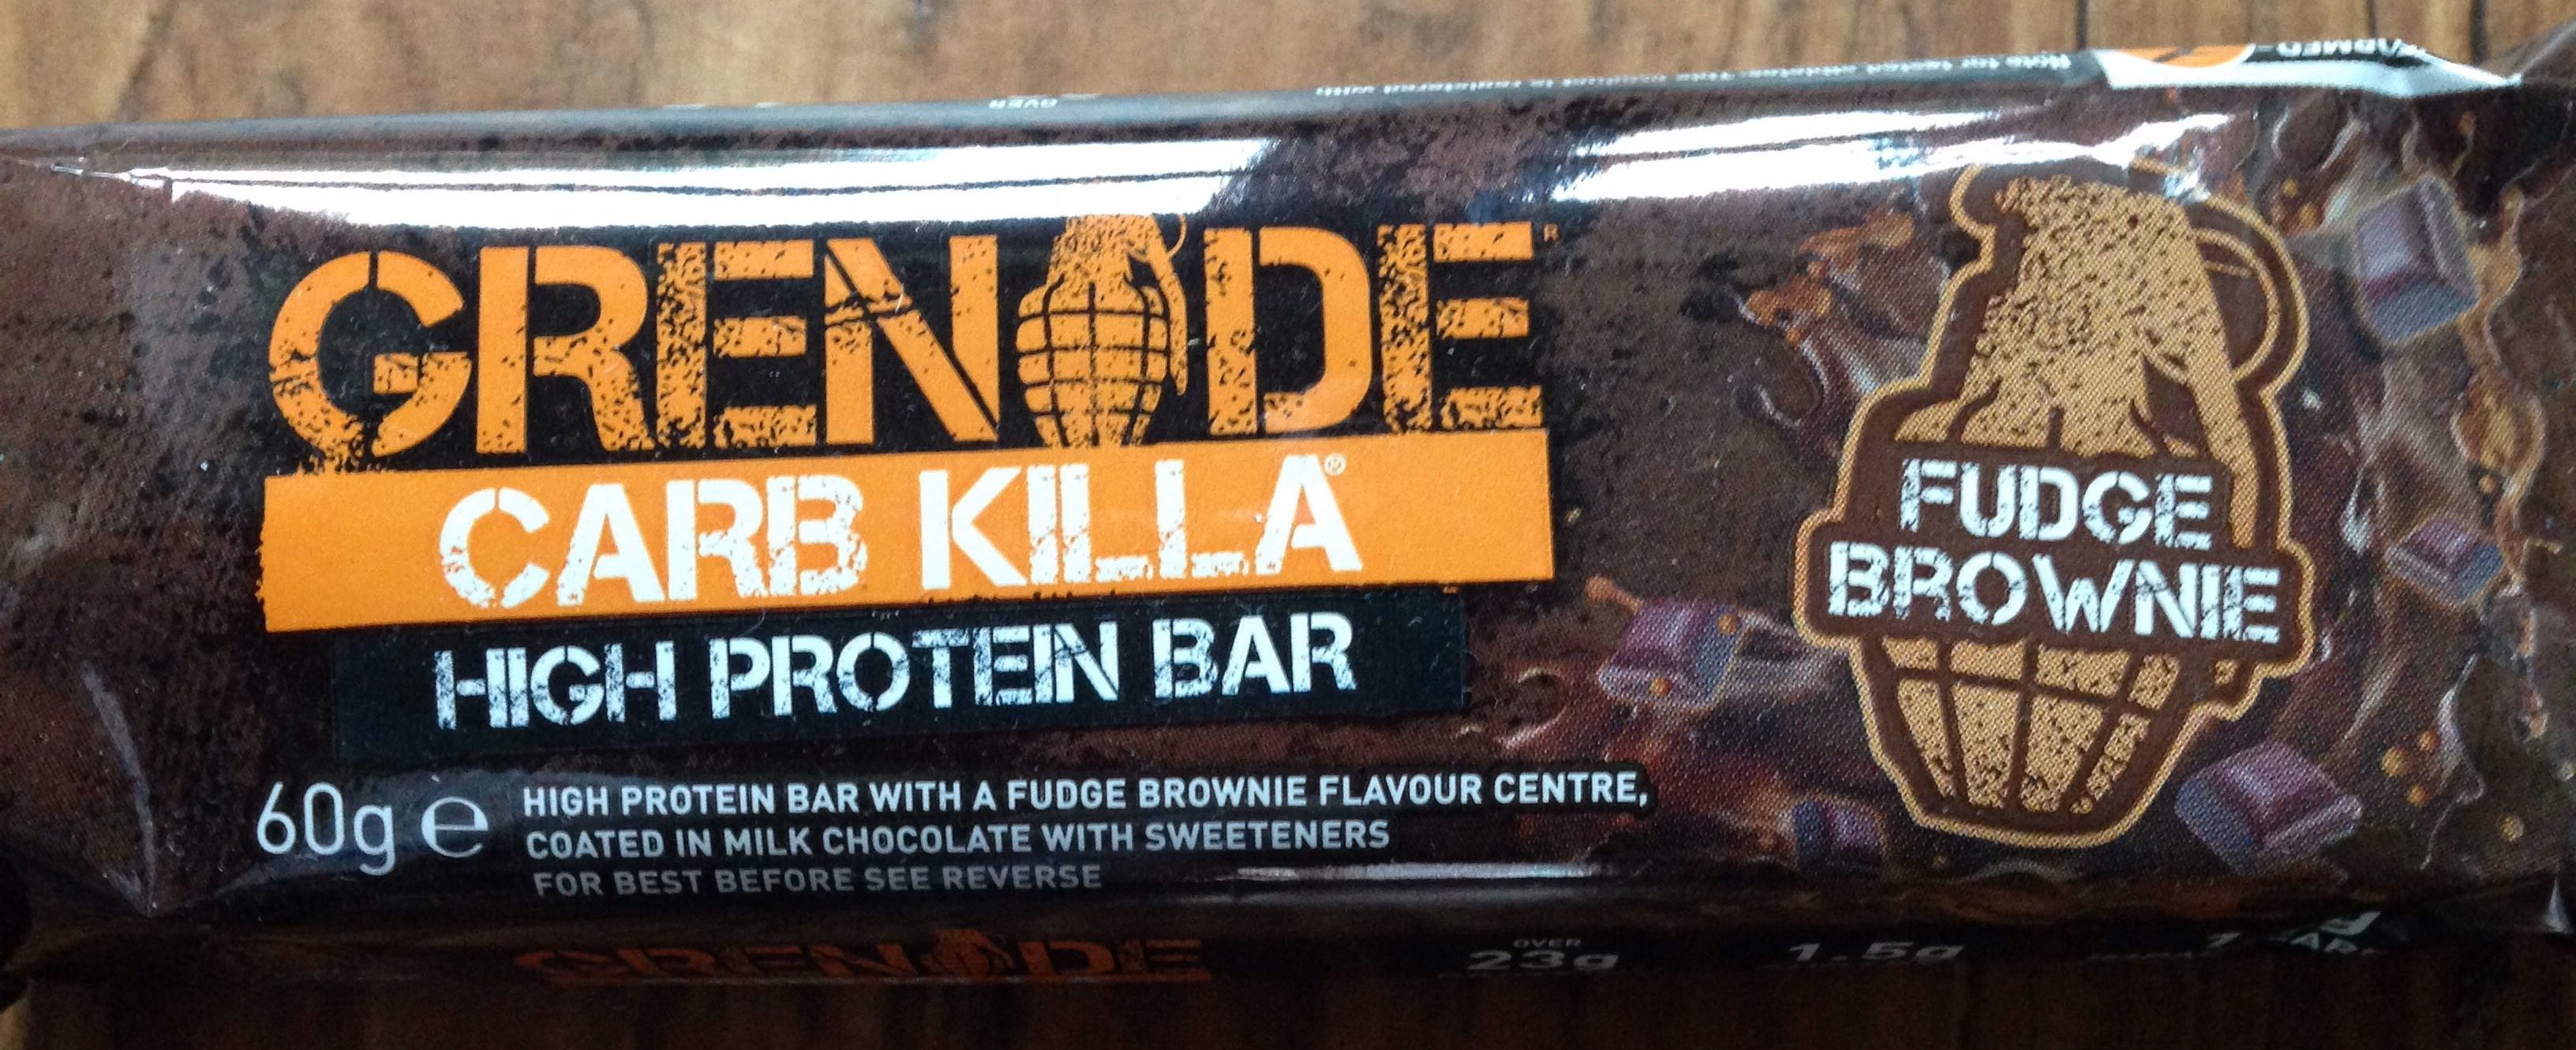 Carb Killa Fudge Brownie - Product